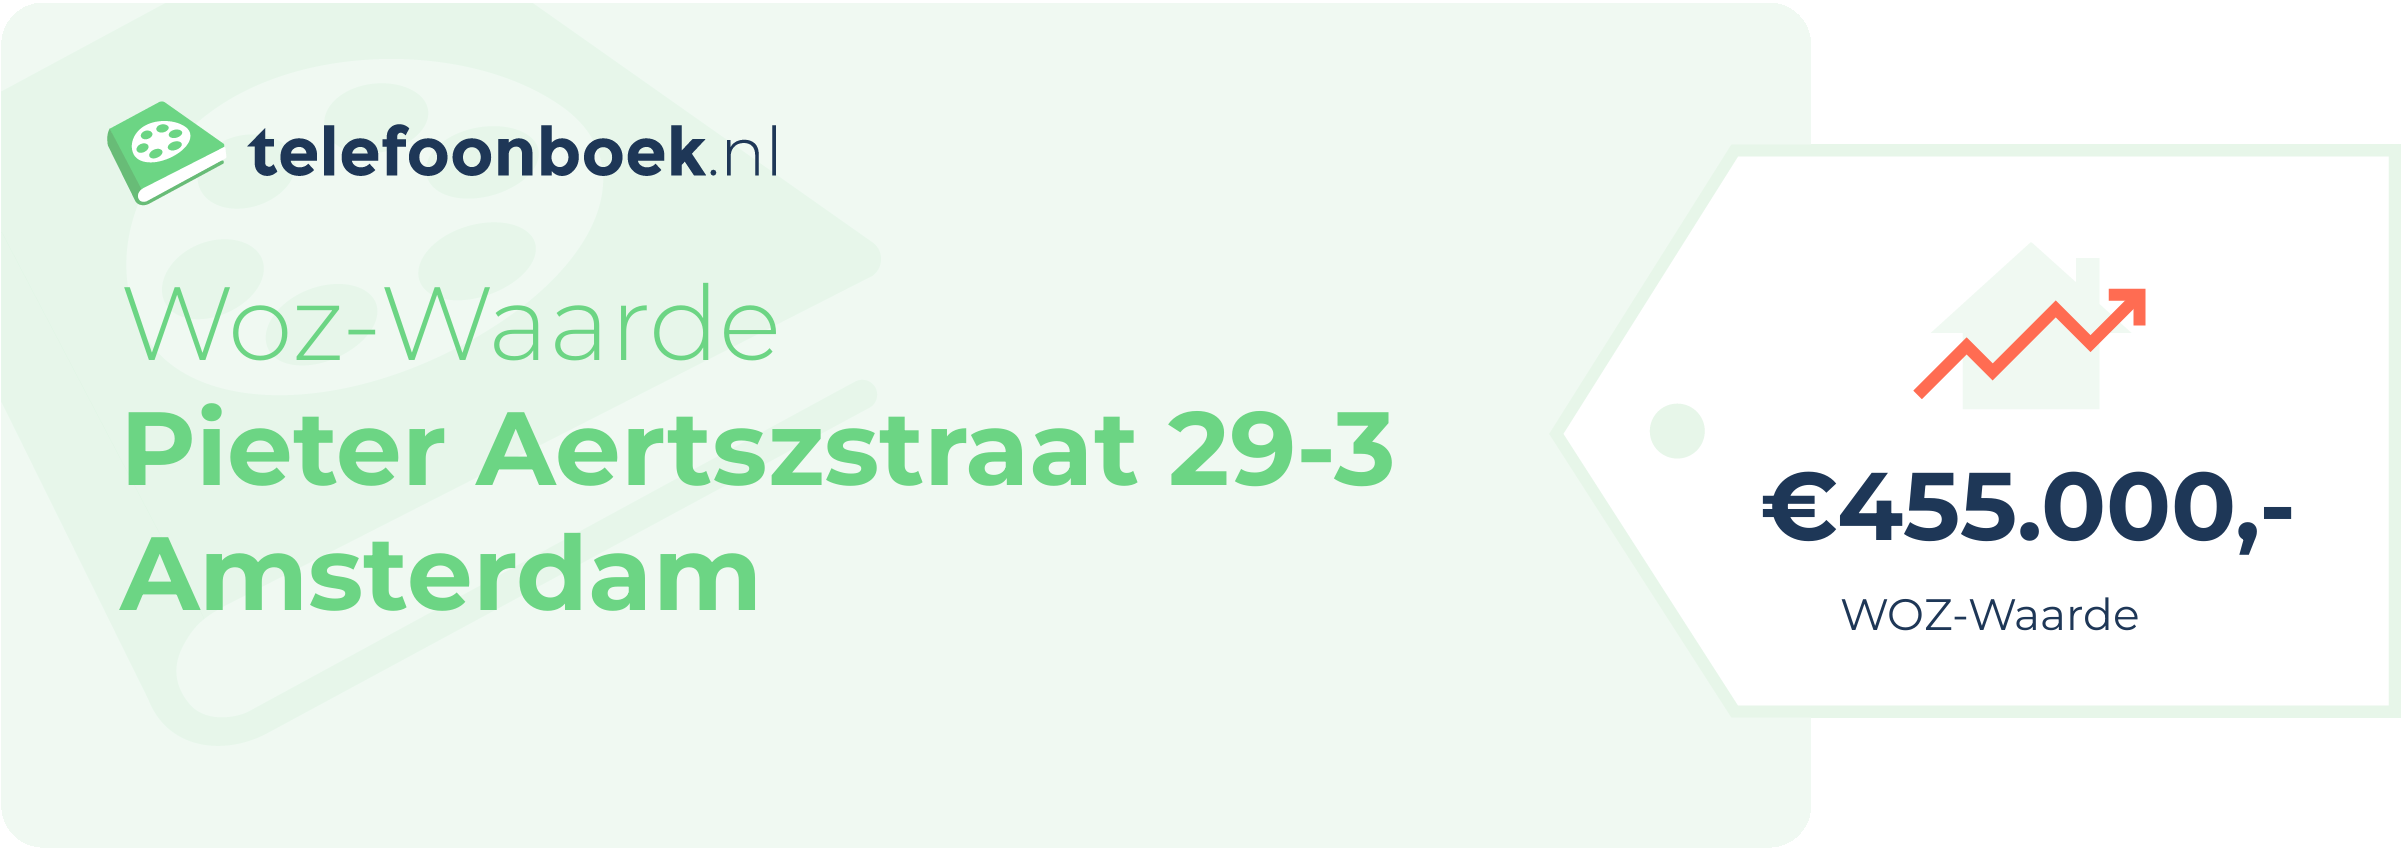 WOZ-waarde Pieter Aertszstraat 29-3 Amsterdam